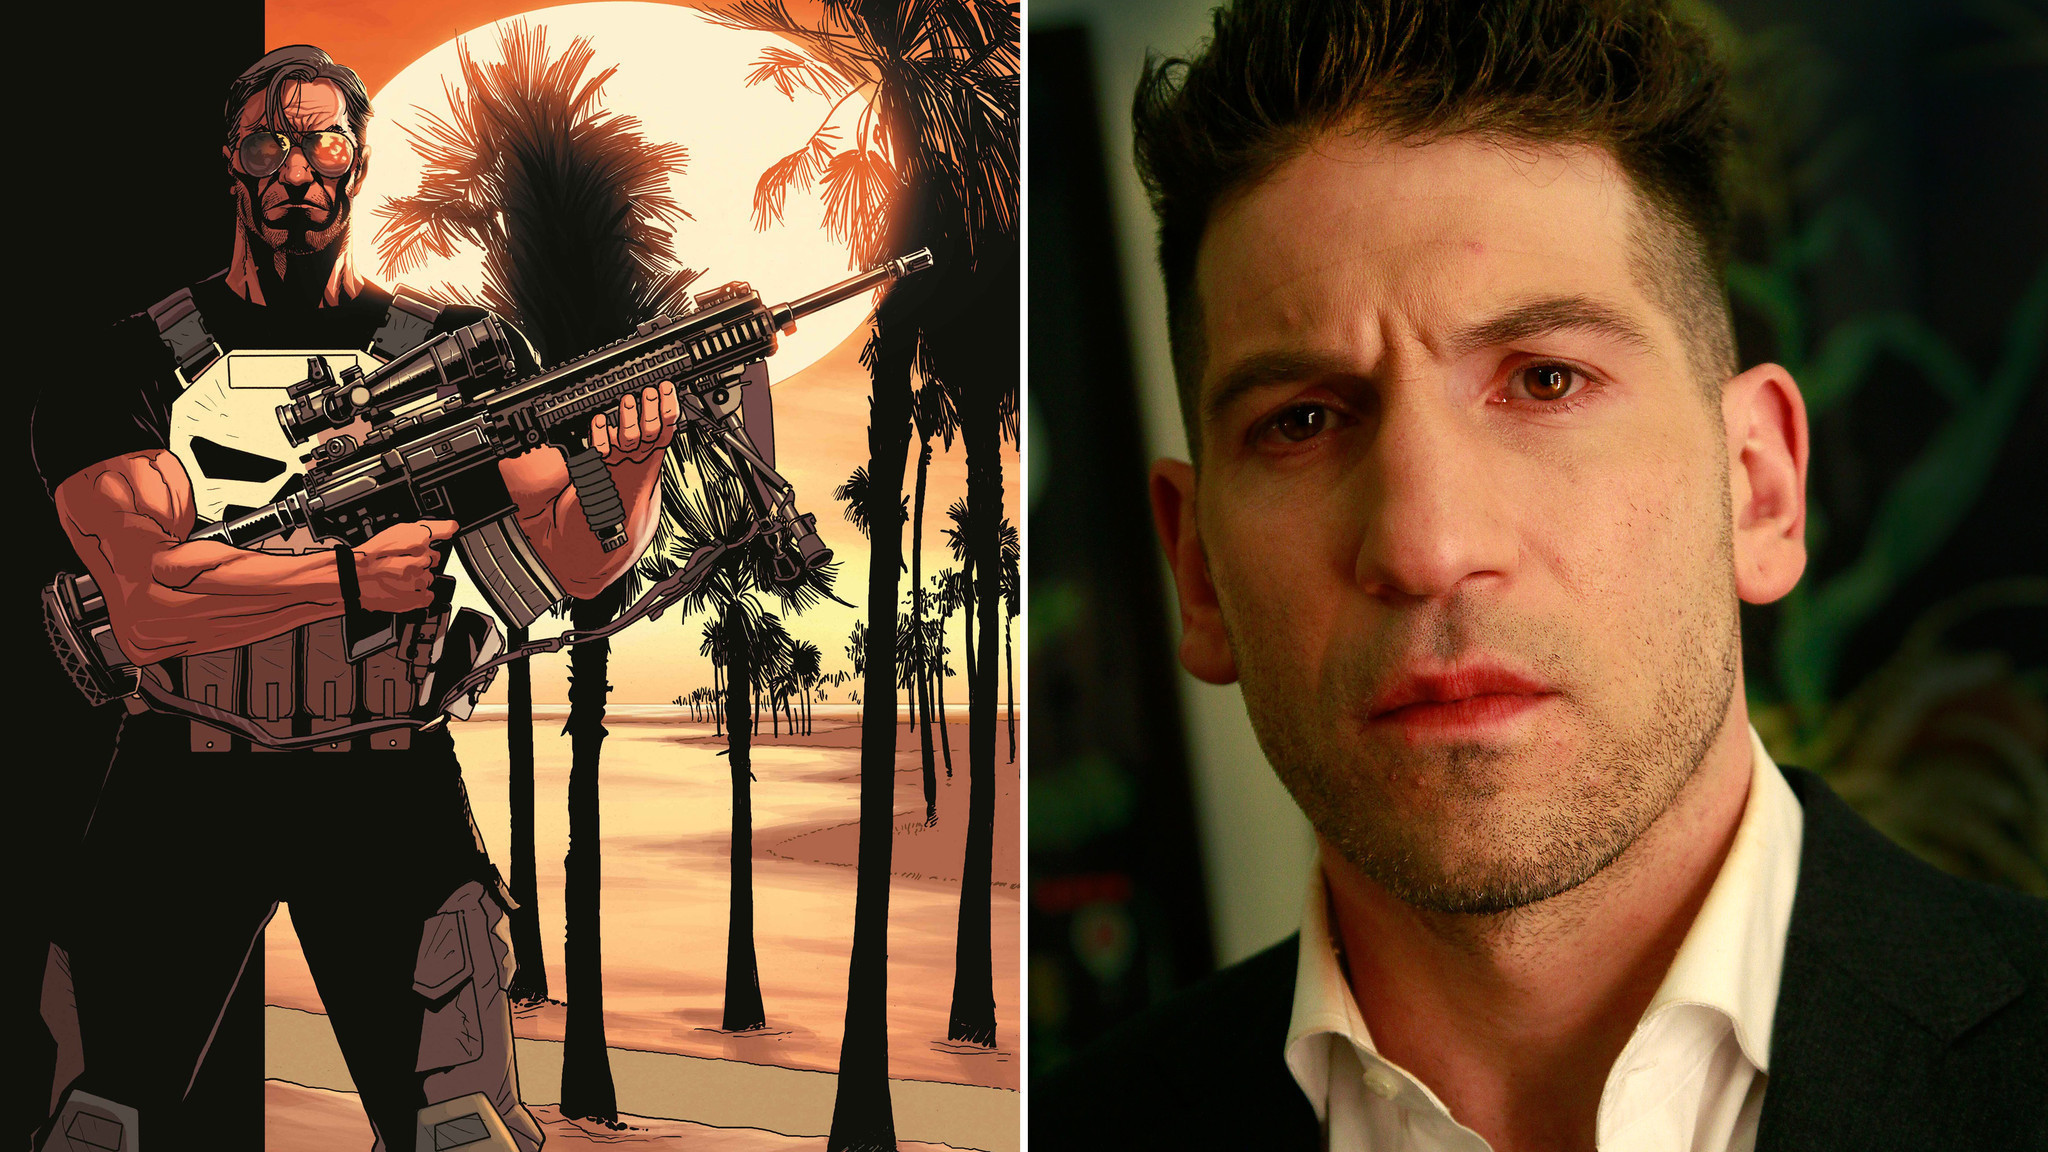 'Walking Dead's' Jon Bernthal to play Punisher in 'Daredevil' series - LA Times2048 x 1152